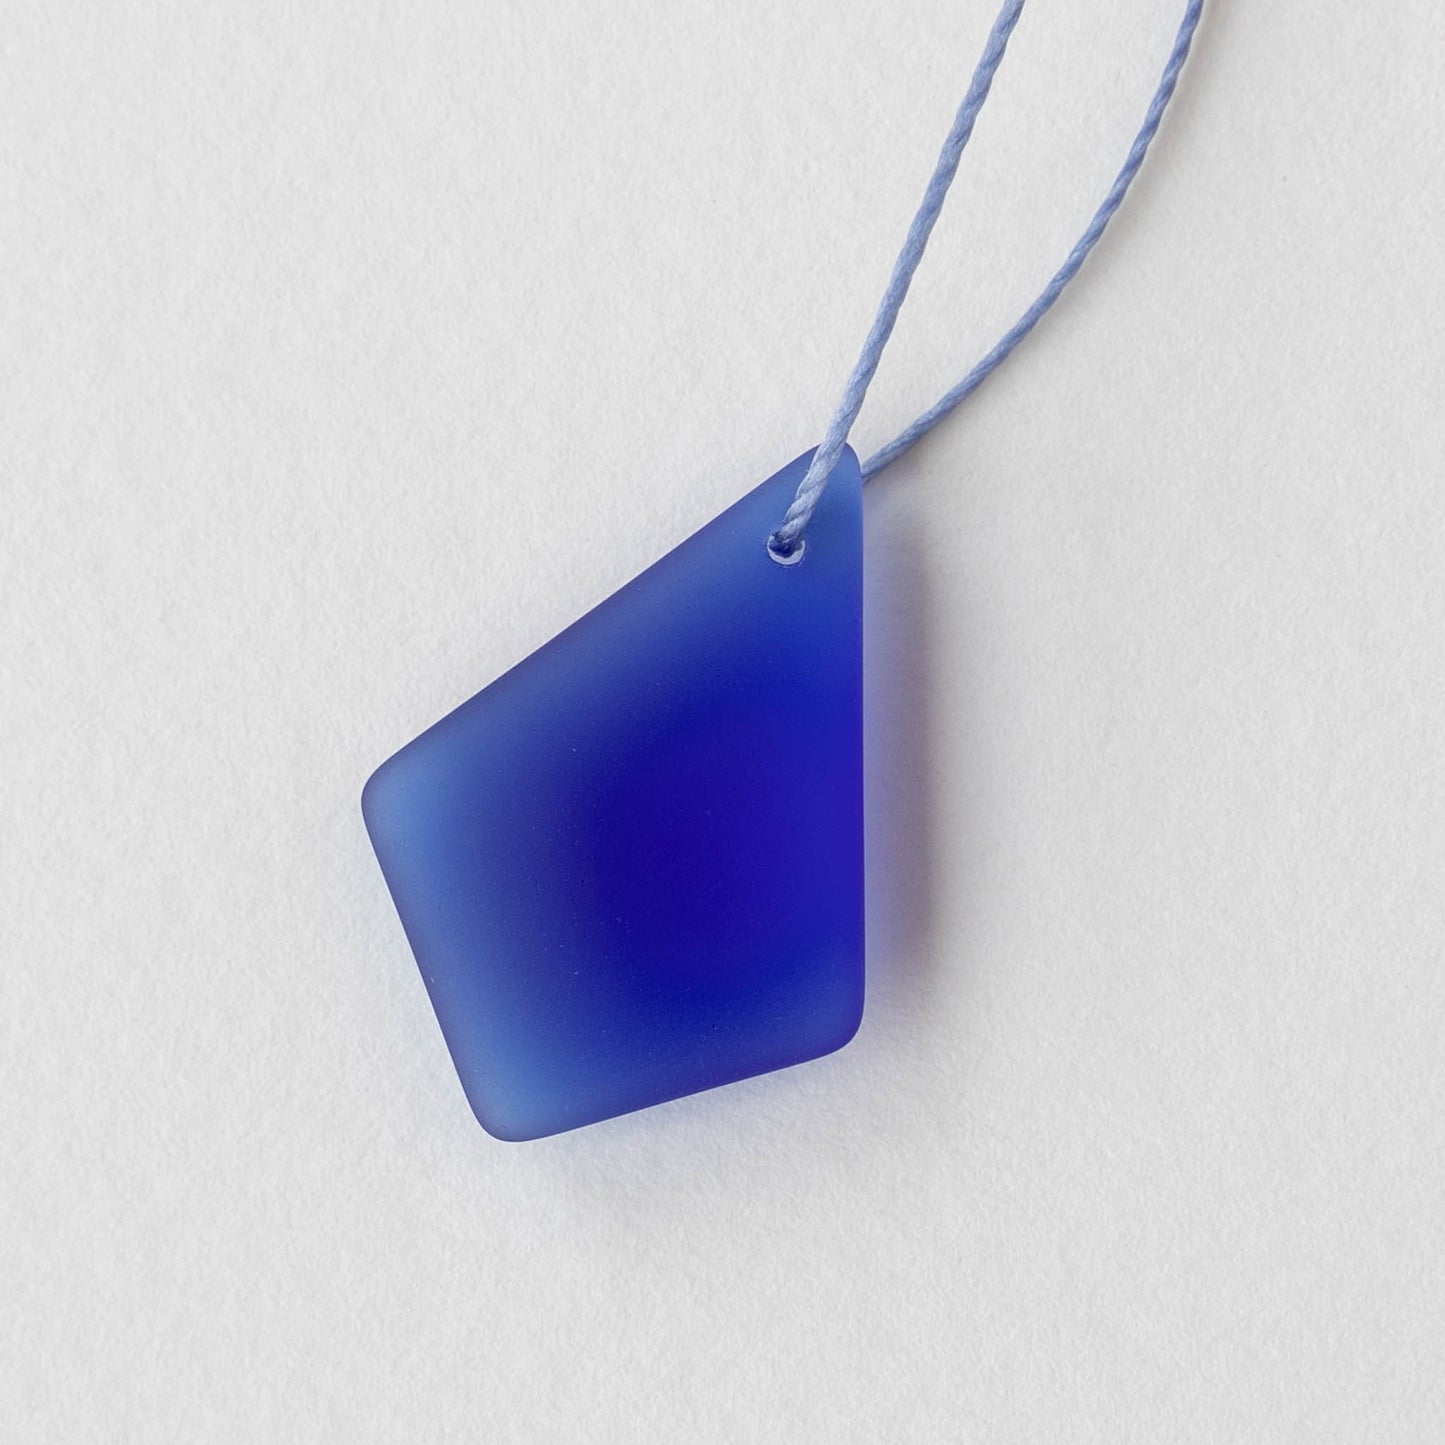 20x28mm Frosted Glass Diamond Pendants - Cobalt Blue